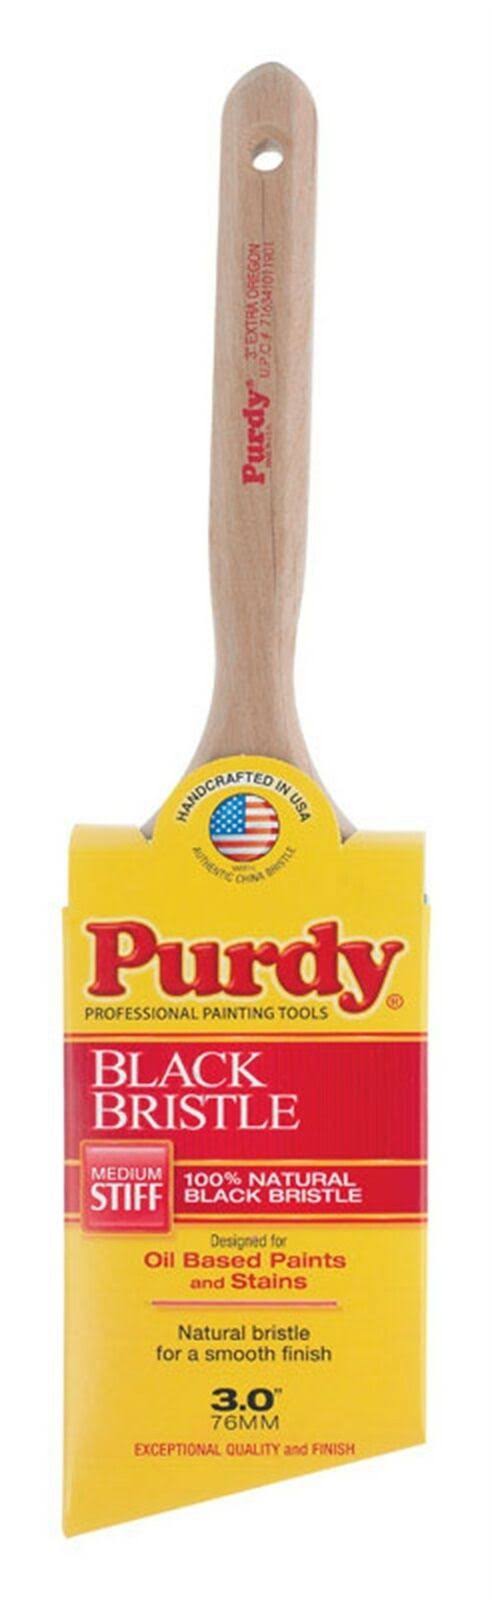 Purdy Black Bristle Series Angular Trim Paint Brush - 3"